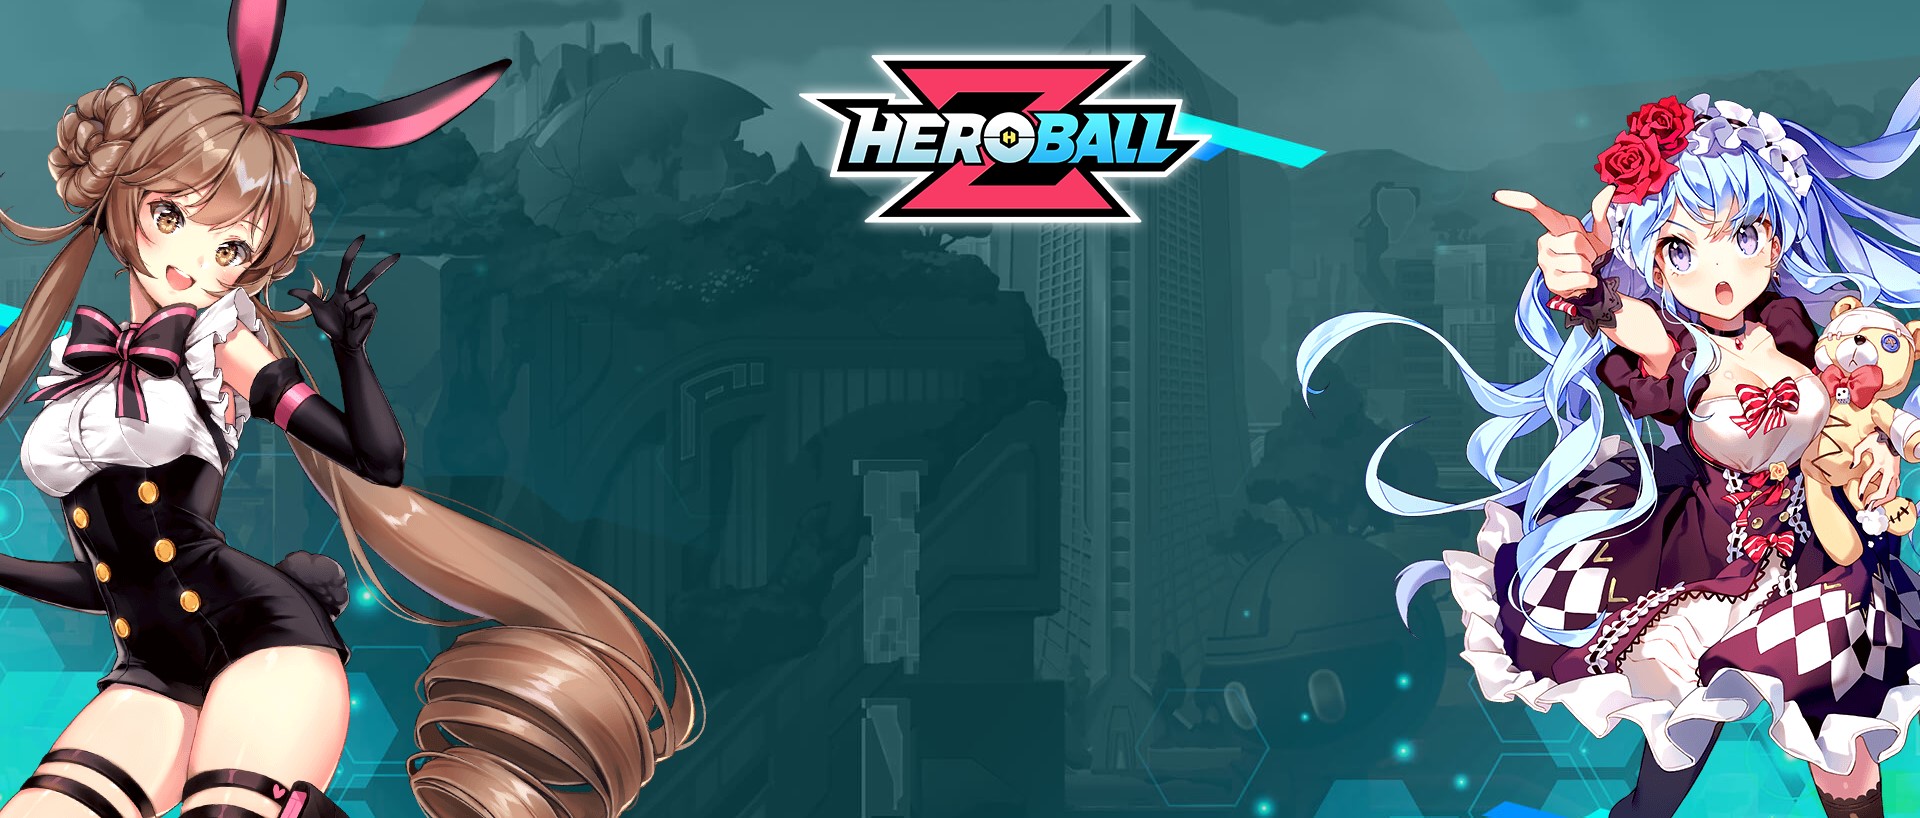 Hero Ball Z - JP updated their cover photo. - Hero Ball Z - JP